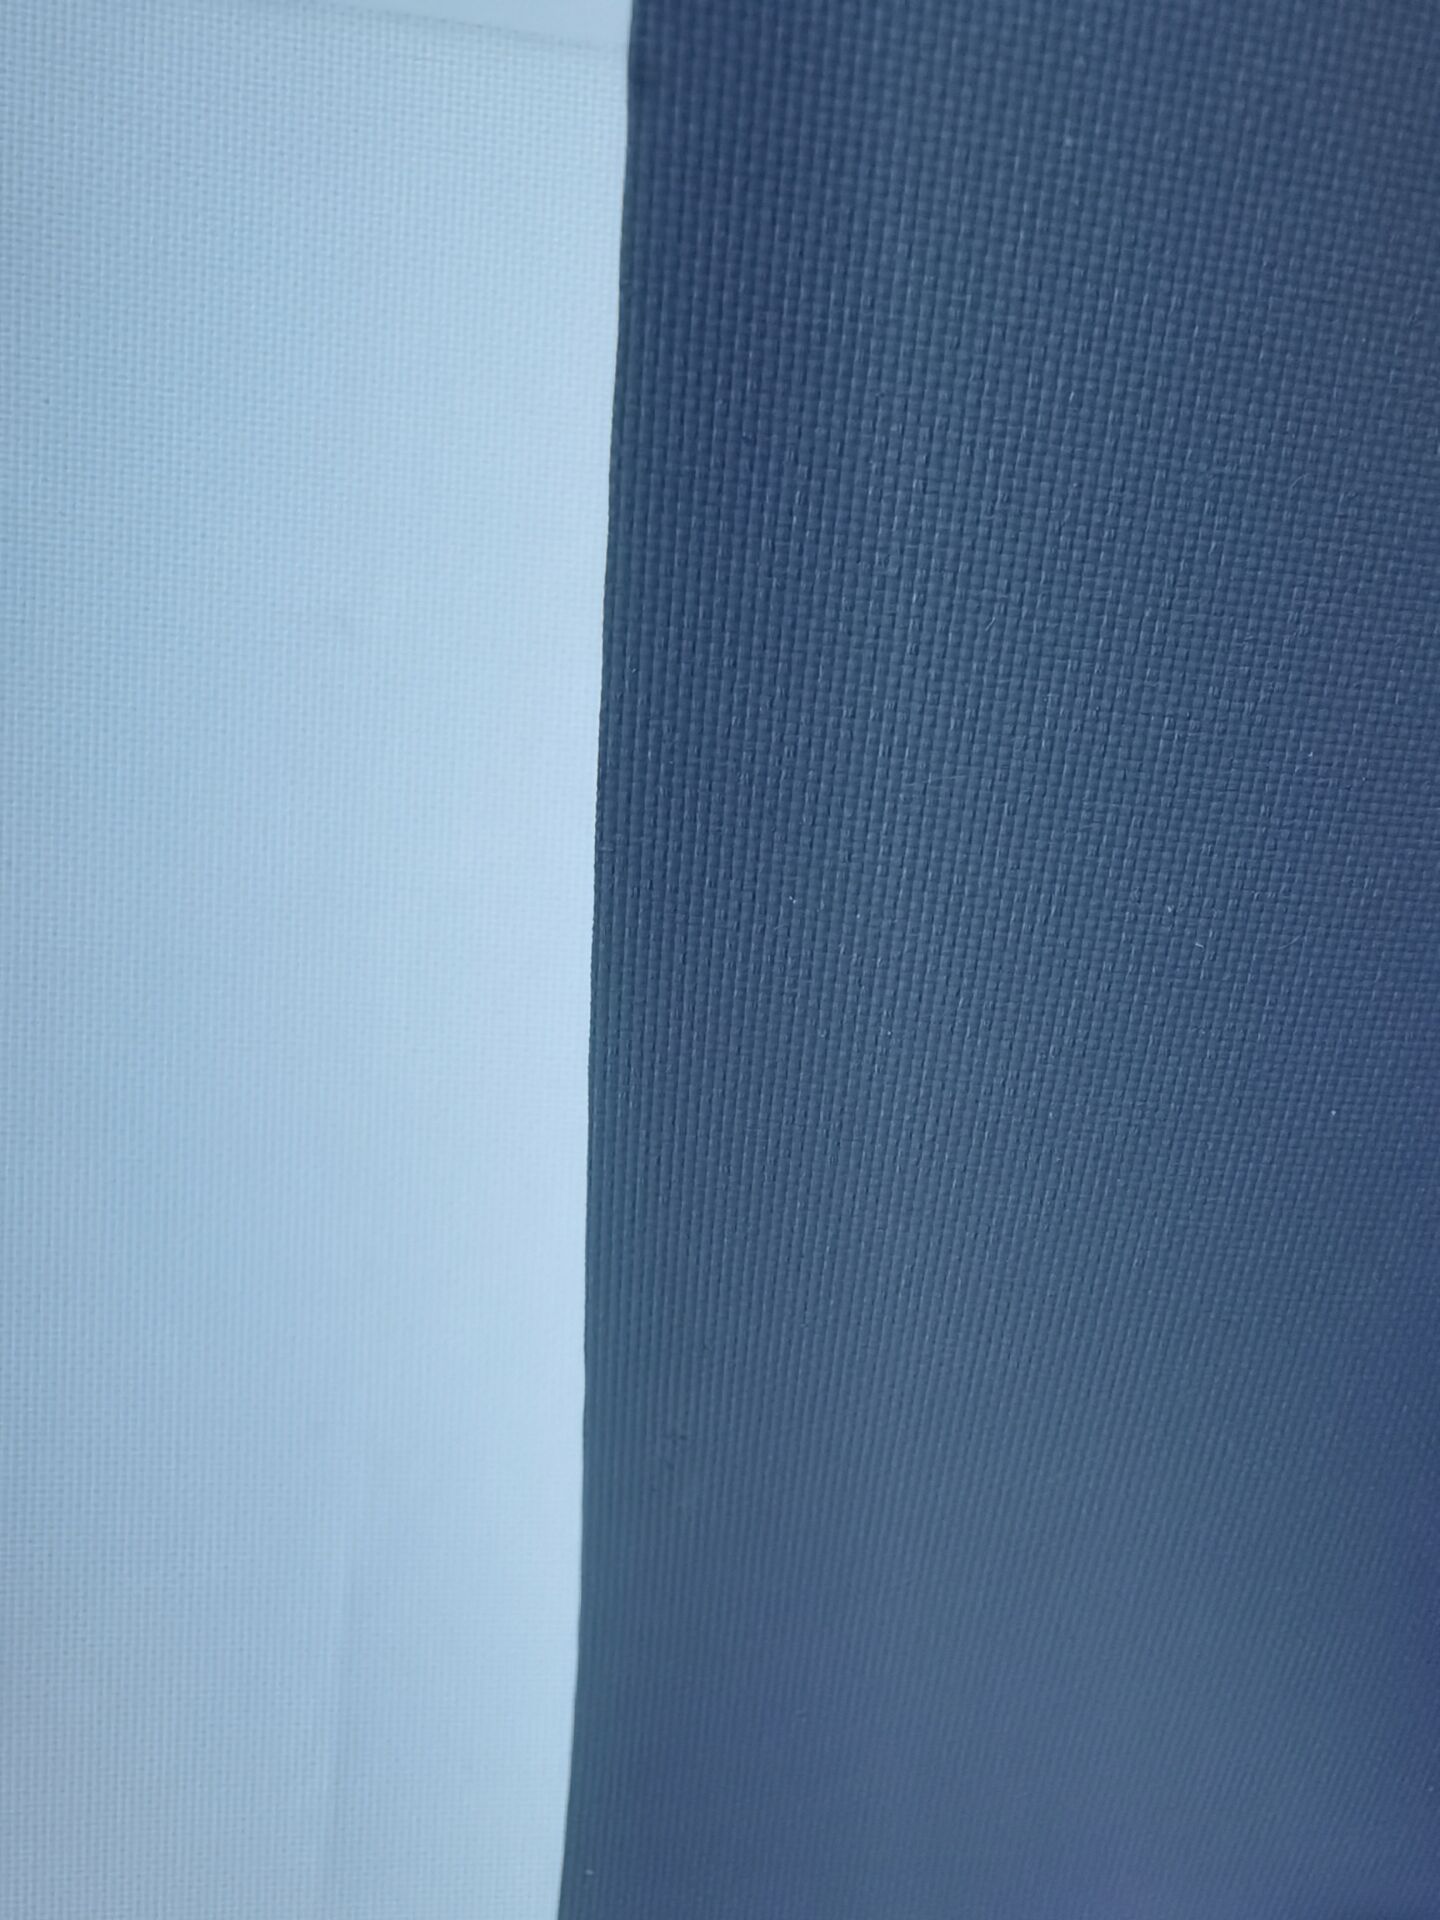 UV Print Greyback Textile